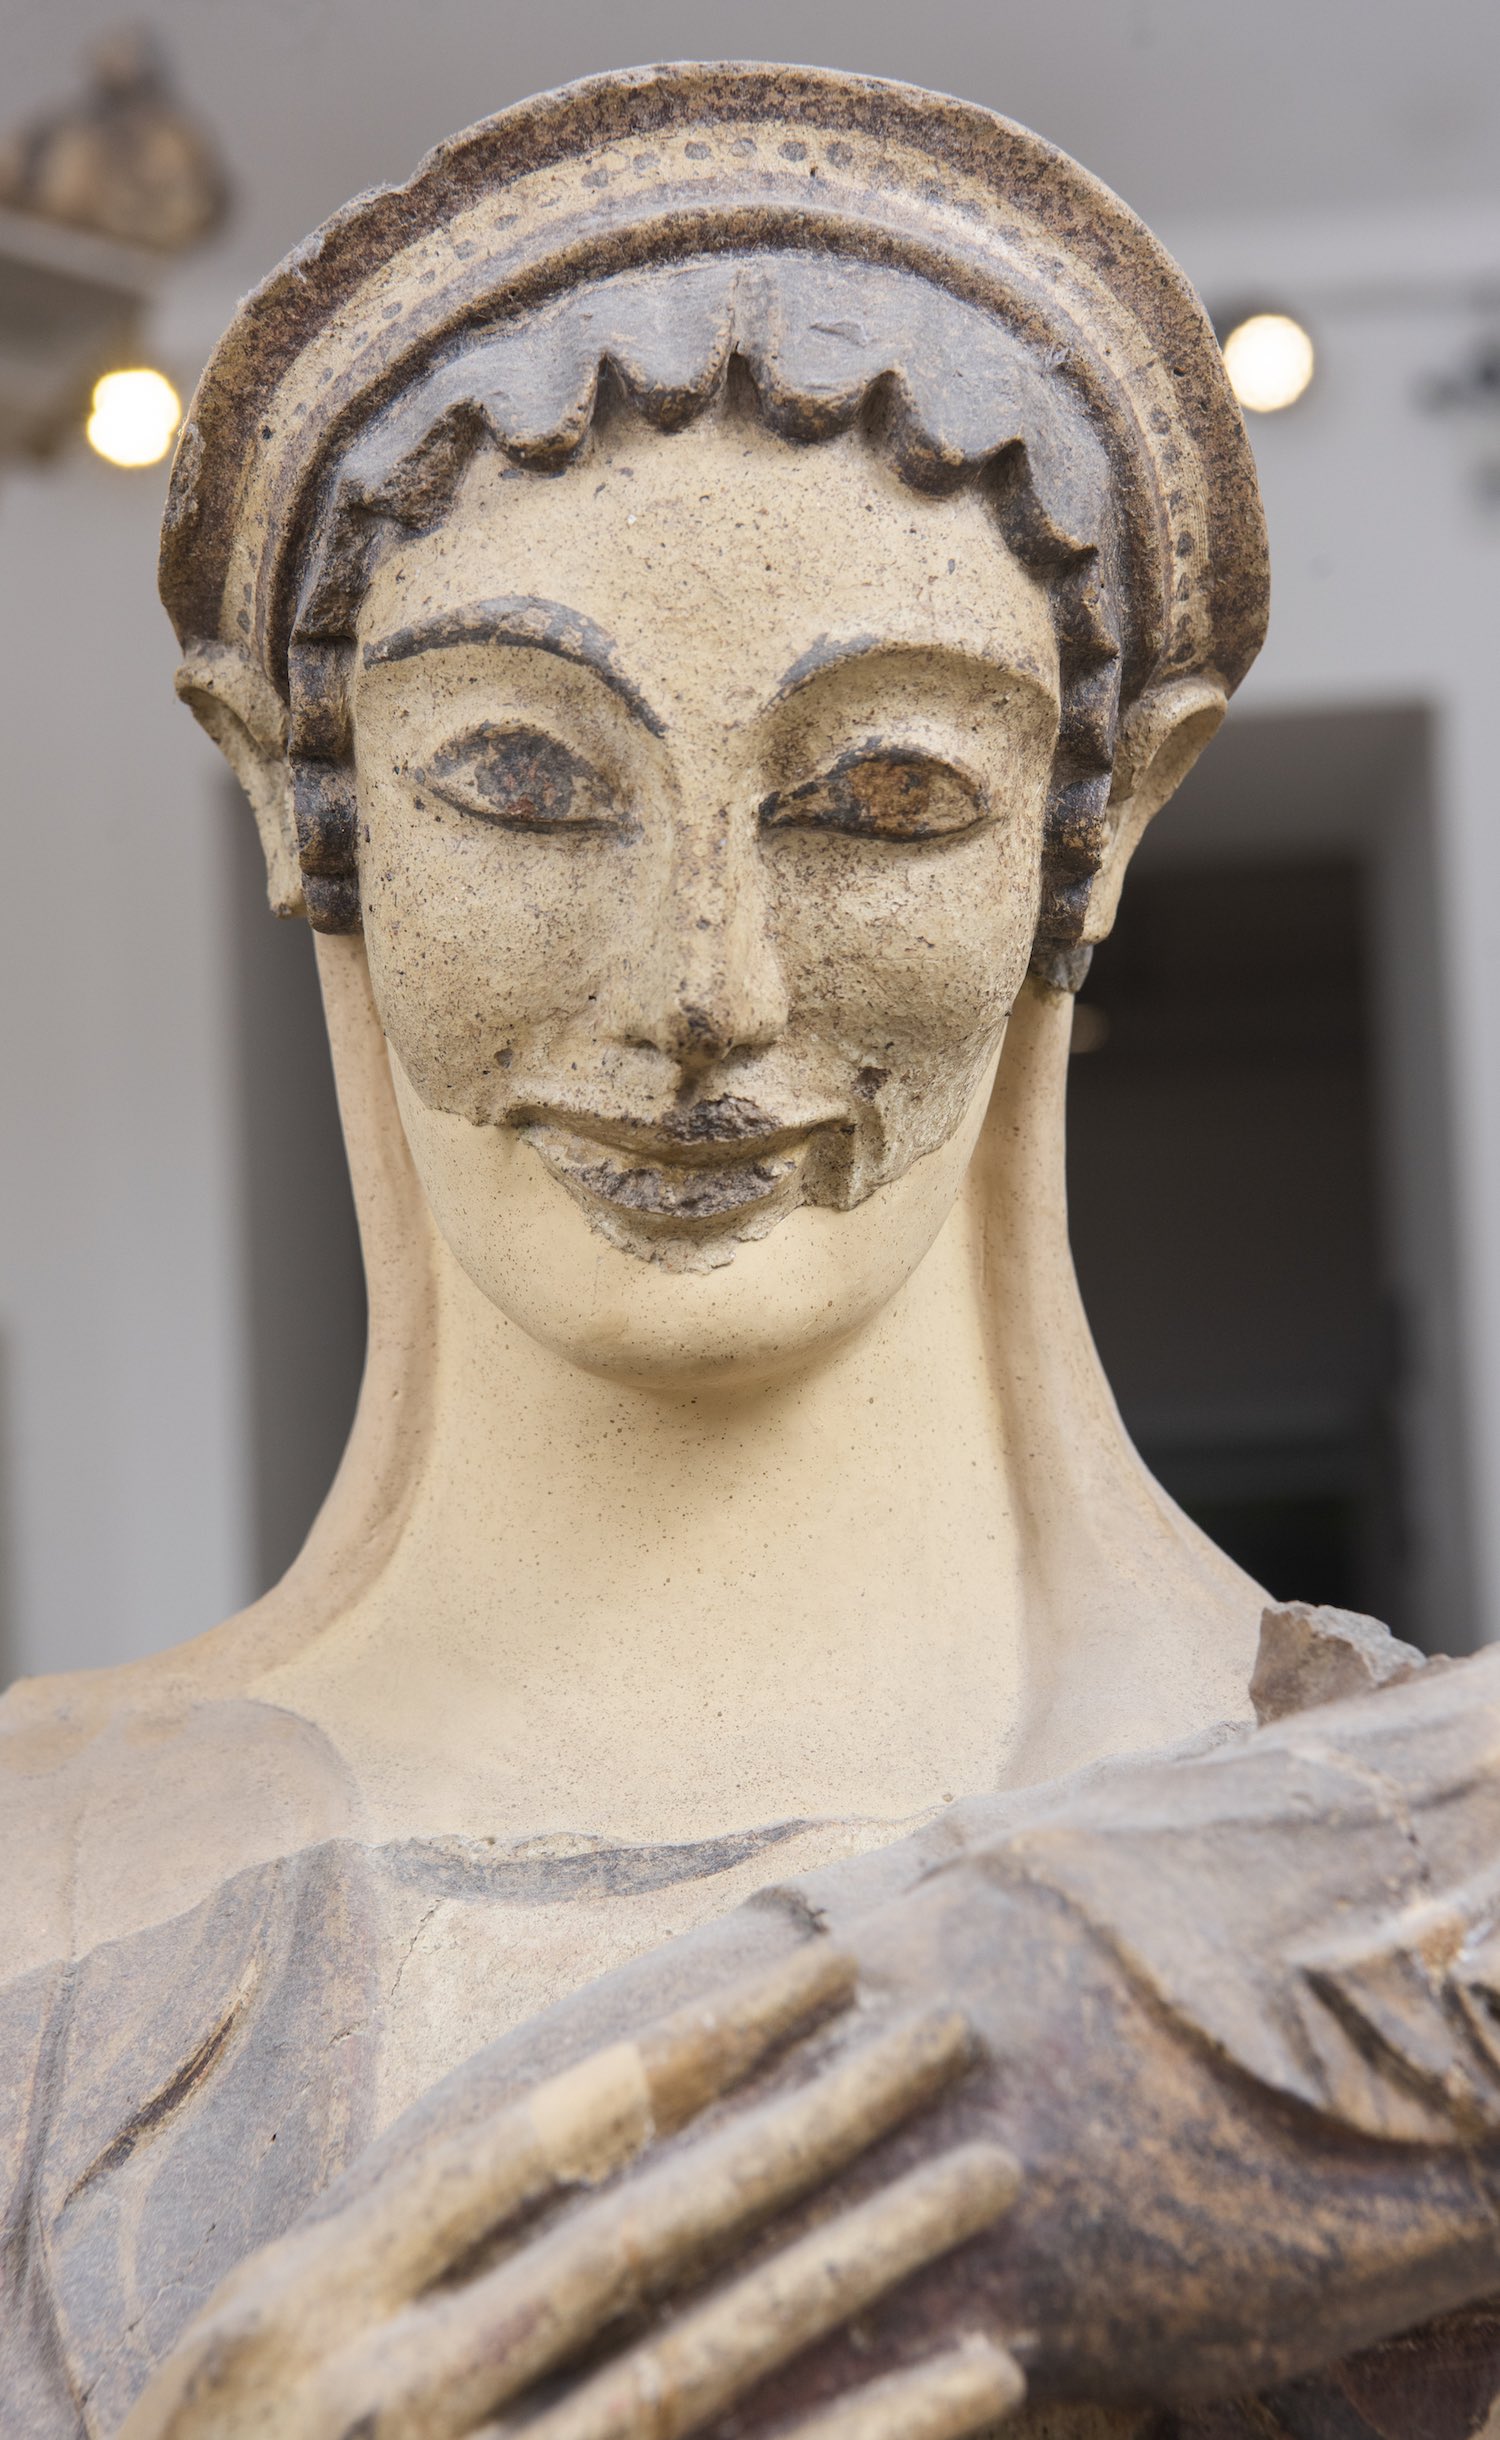 Le visage de Latone restauré. © ETRU, Archivio fotografico Museo Nazionale Etrusco di Villa Giulia.